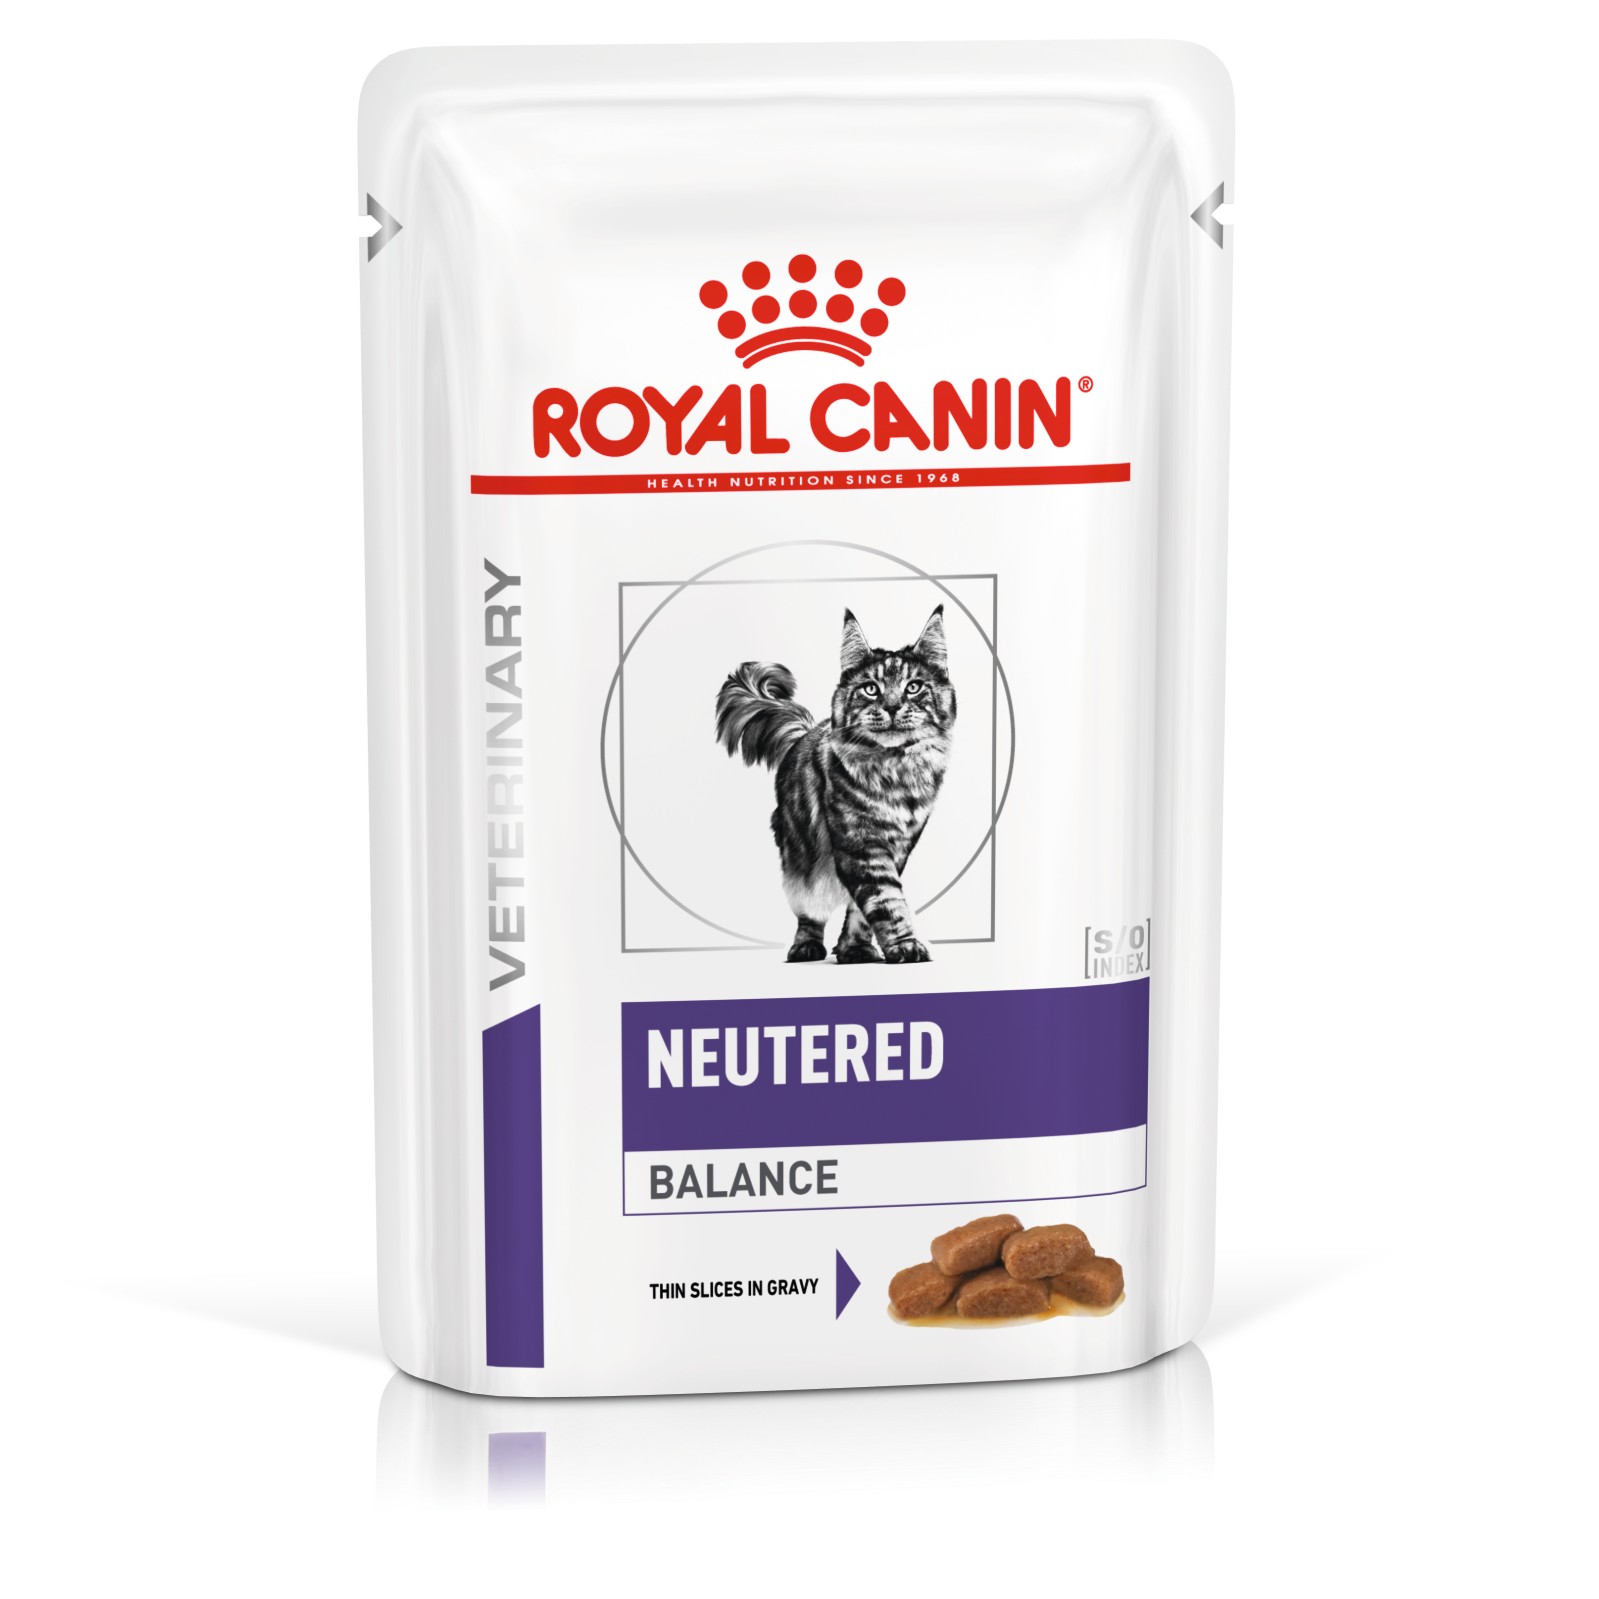 Royal Canin Neutered Weight Balance пауч для кошек 85 г 1